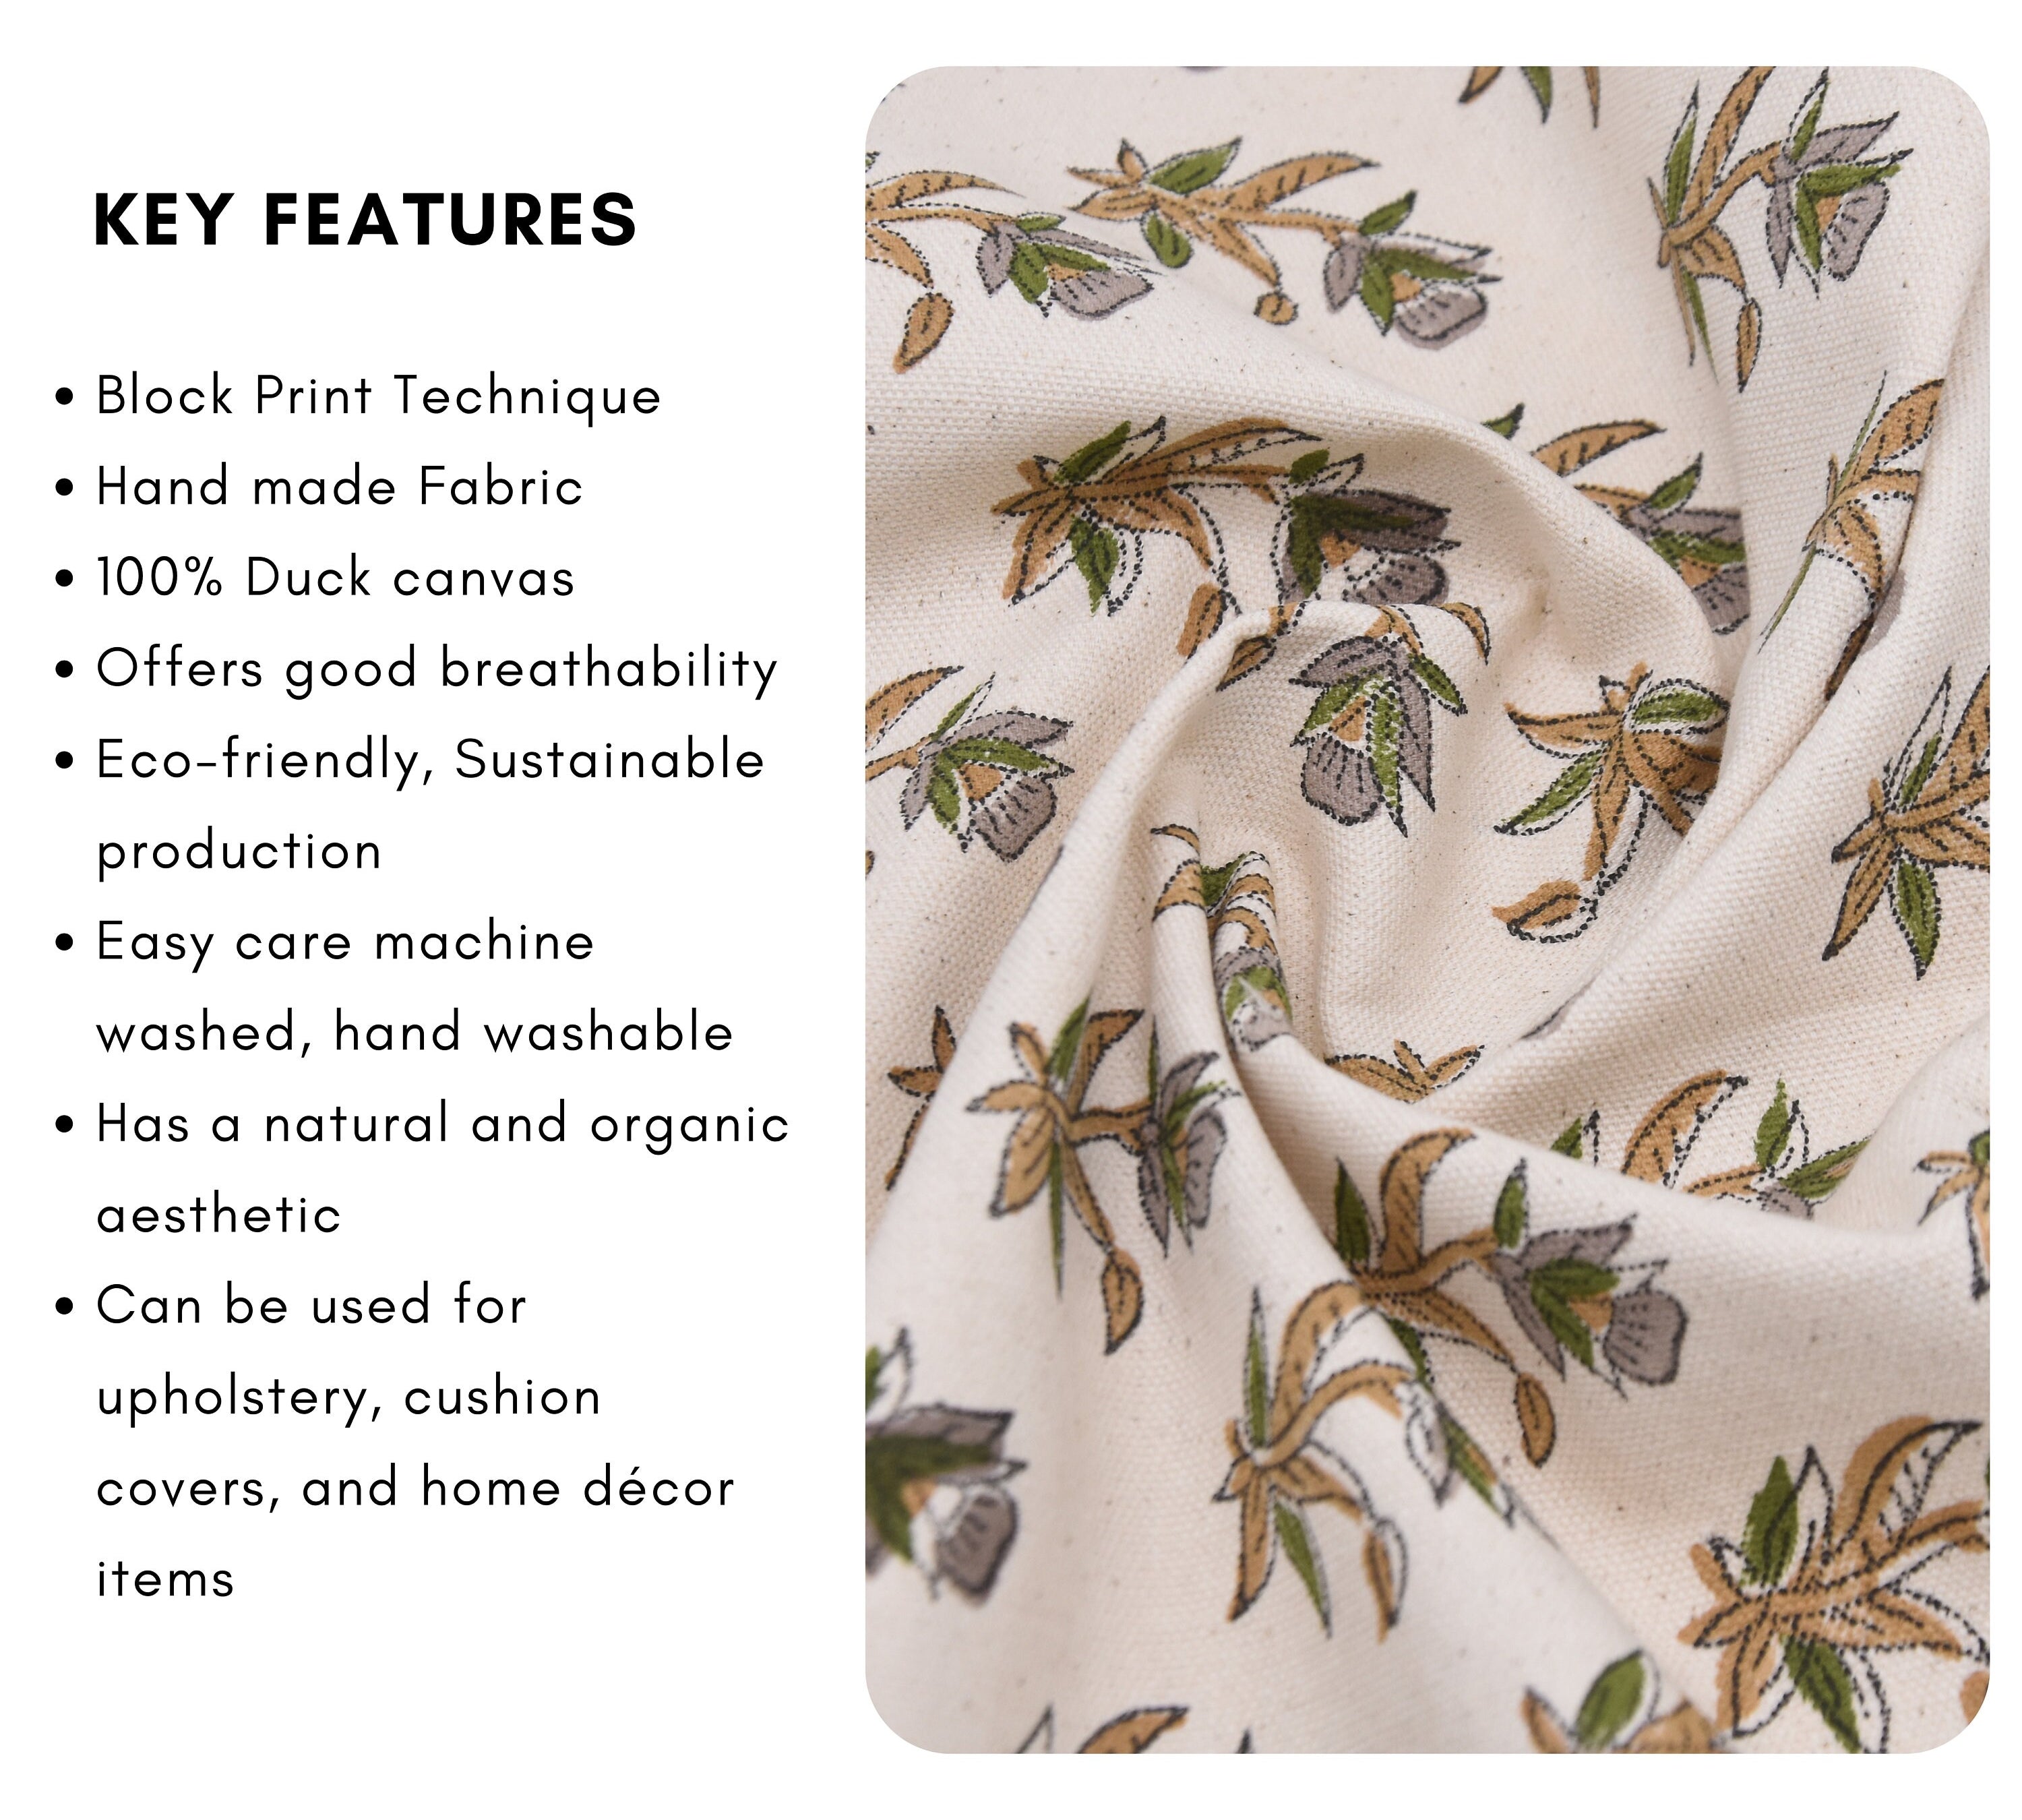 Decorative floral cushion cover, hand block print fabric, printed cotton, duck canvas 50" wide, boho décor - COASTAL TULIP